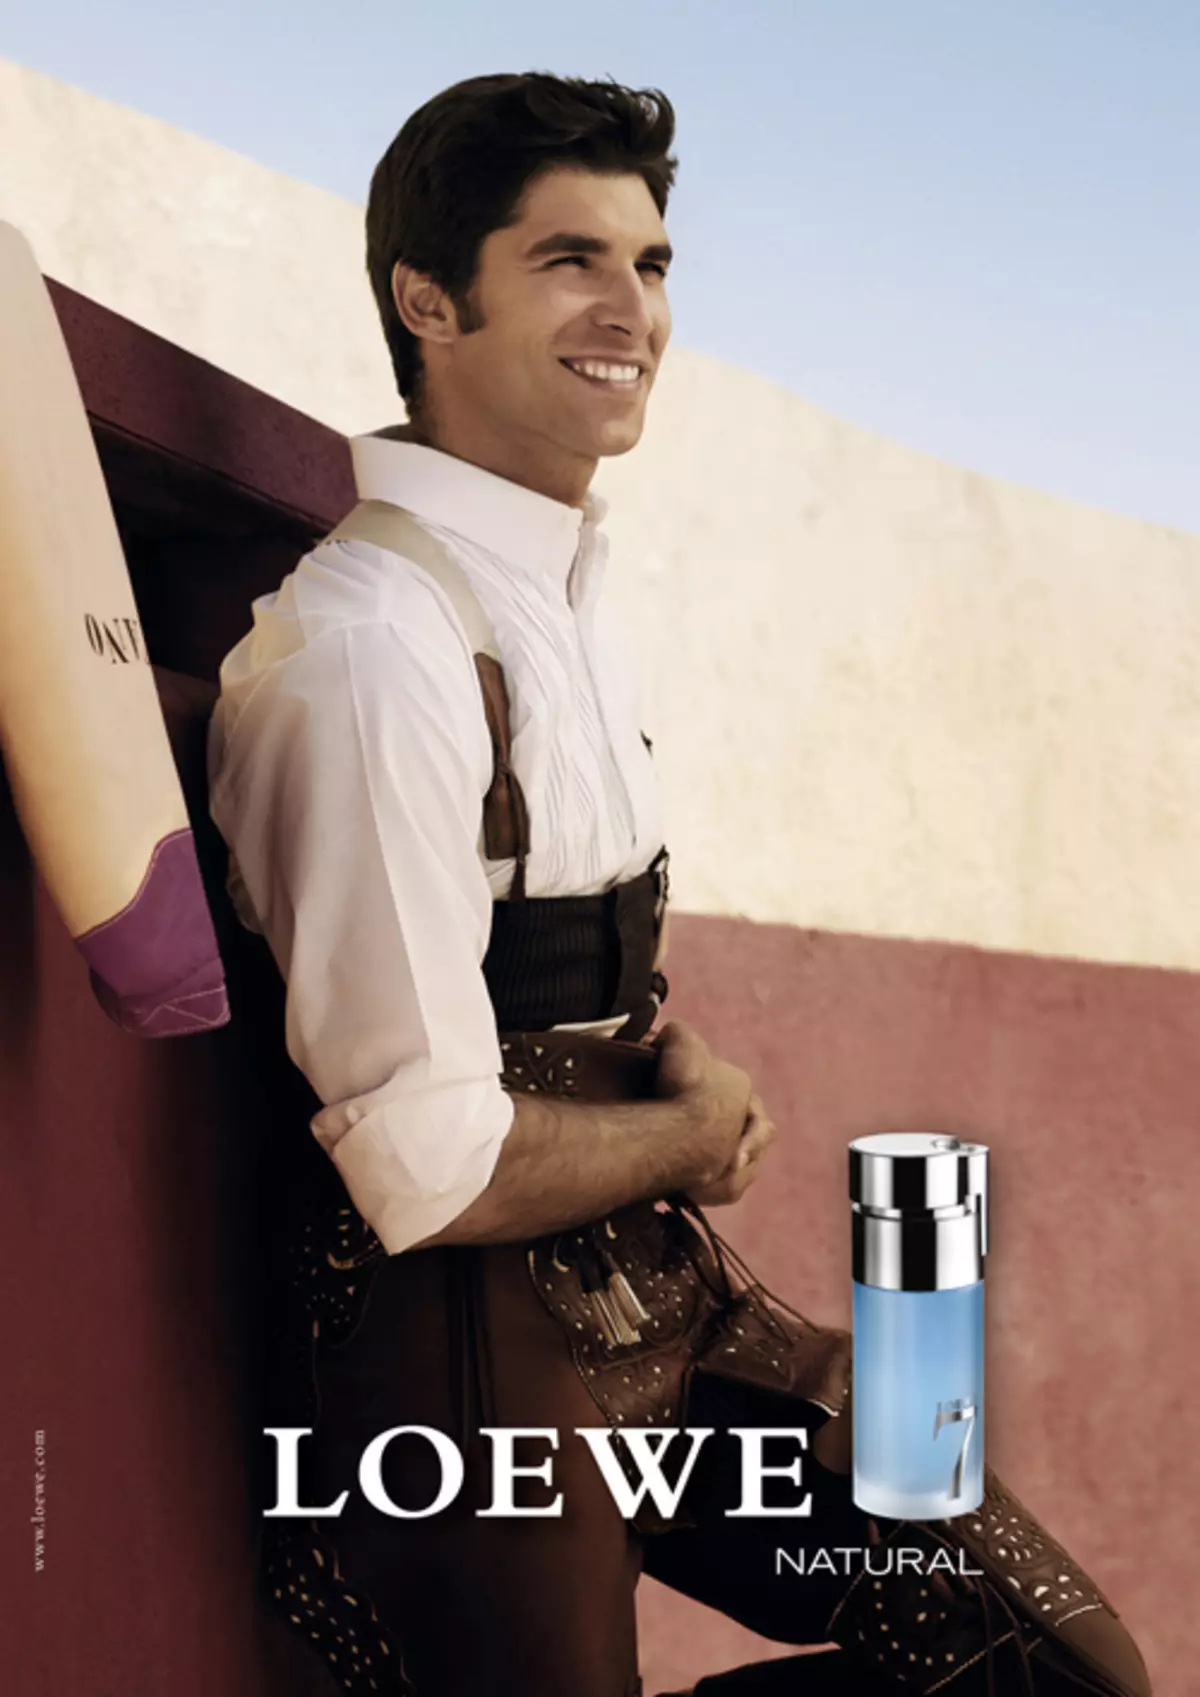 Perfume Loewe: ქალთა სუნამო და ტუალეტის წყალი, Aura და Quizas, Loewe 7 და Solo Loewe Elle ქალებისათვის, სხვა სუნამო სუნამოები 25325_5